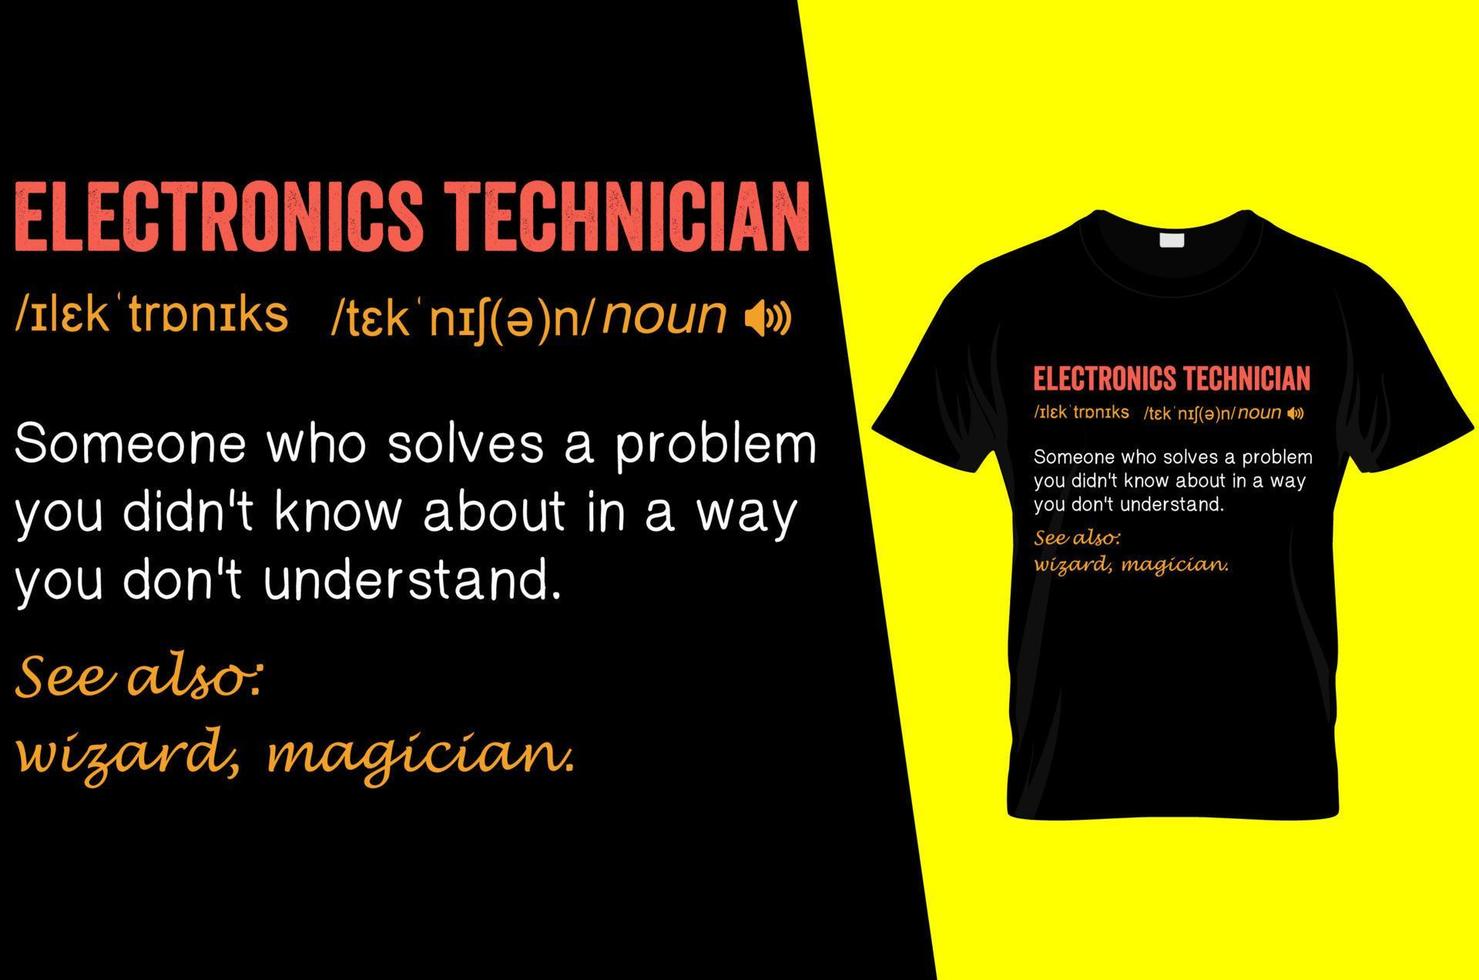 Definitionst-shirt Entwurf des Elektroniktechnikers lustiger vektor